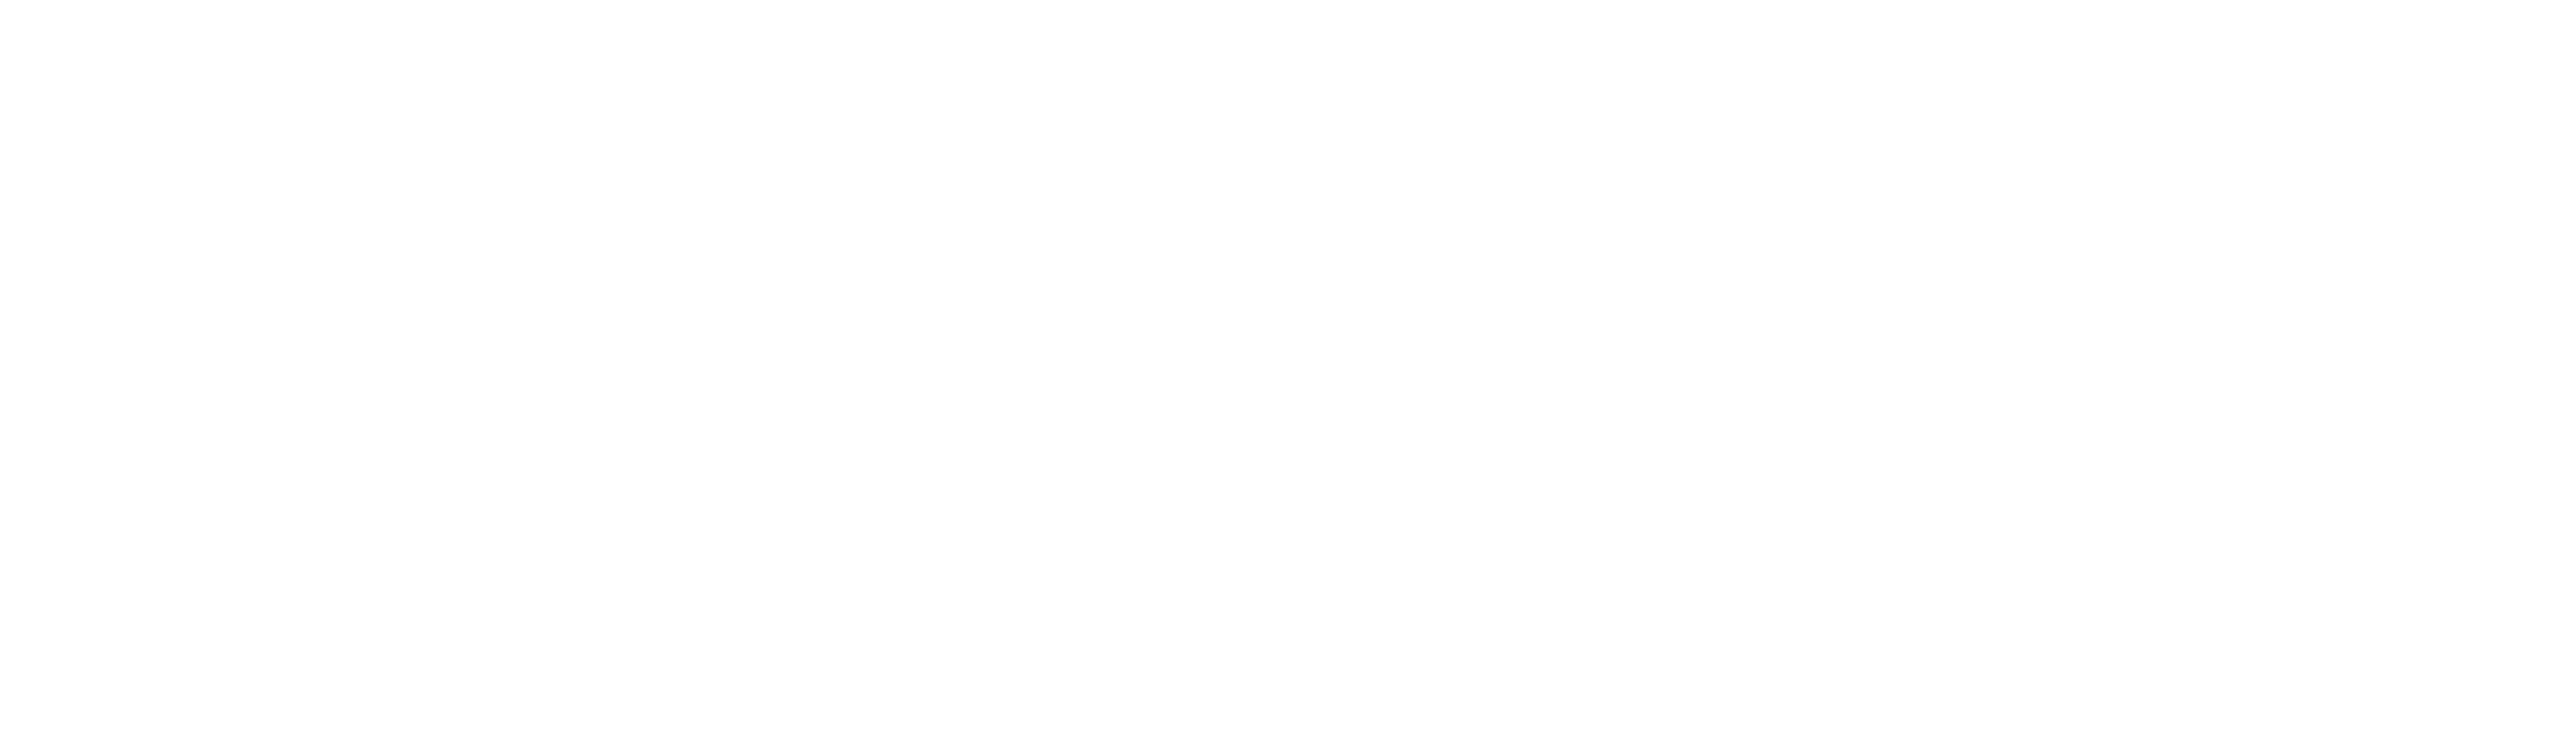 Accomplishing Innovation Press